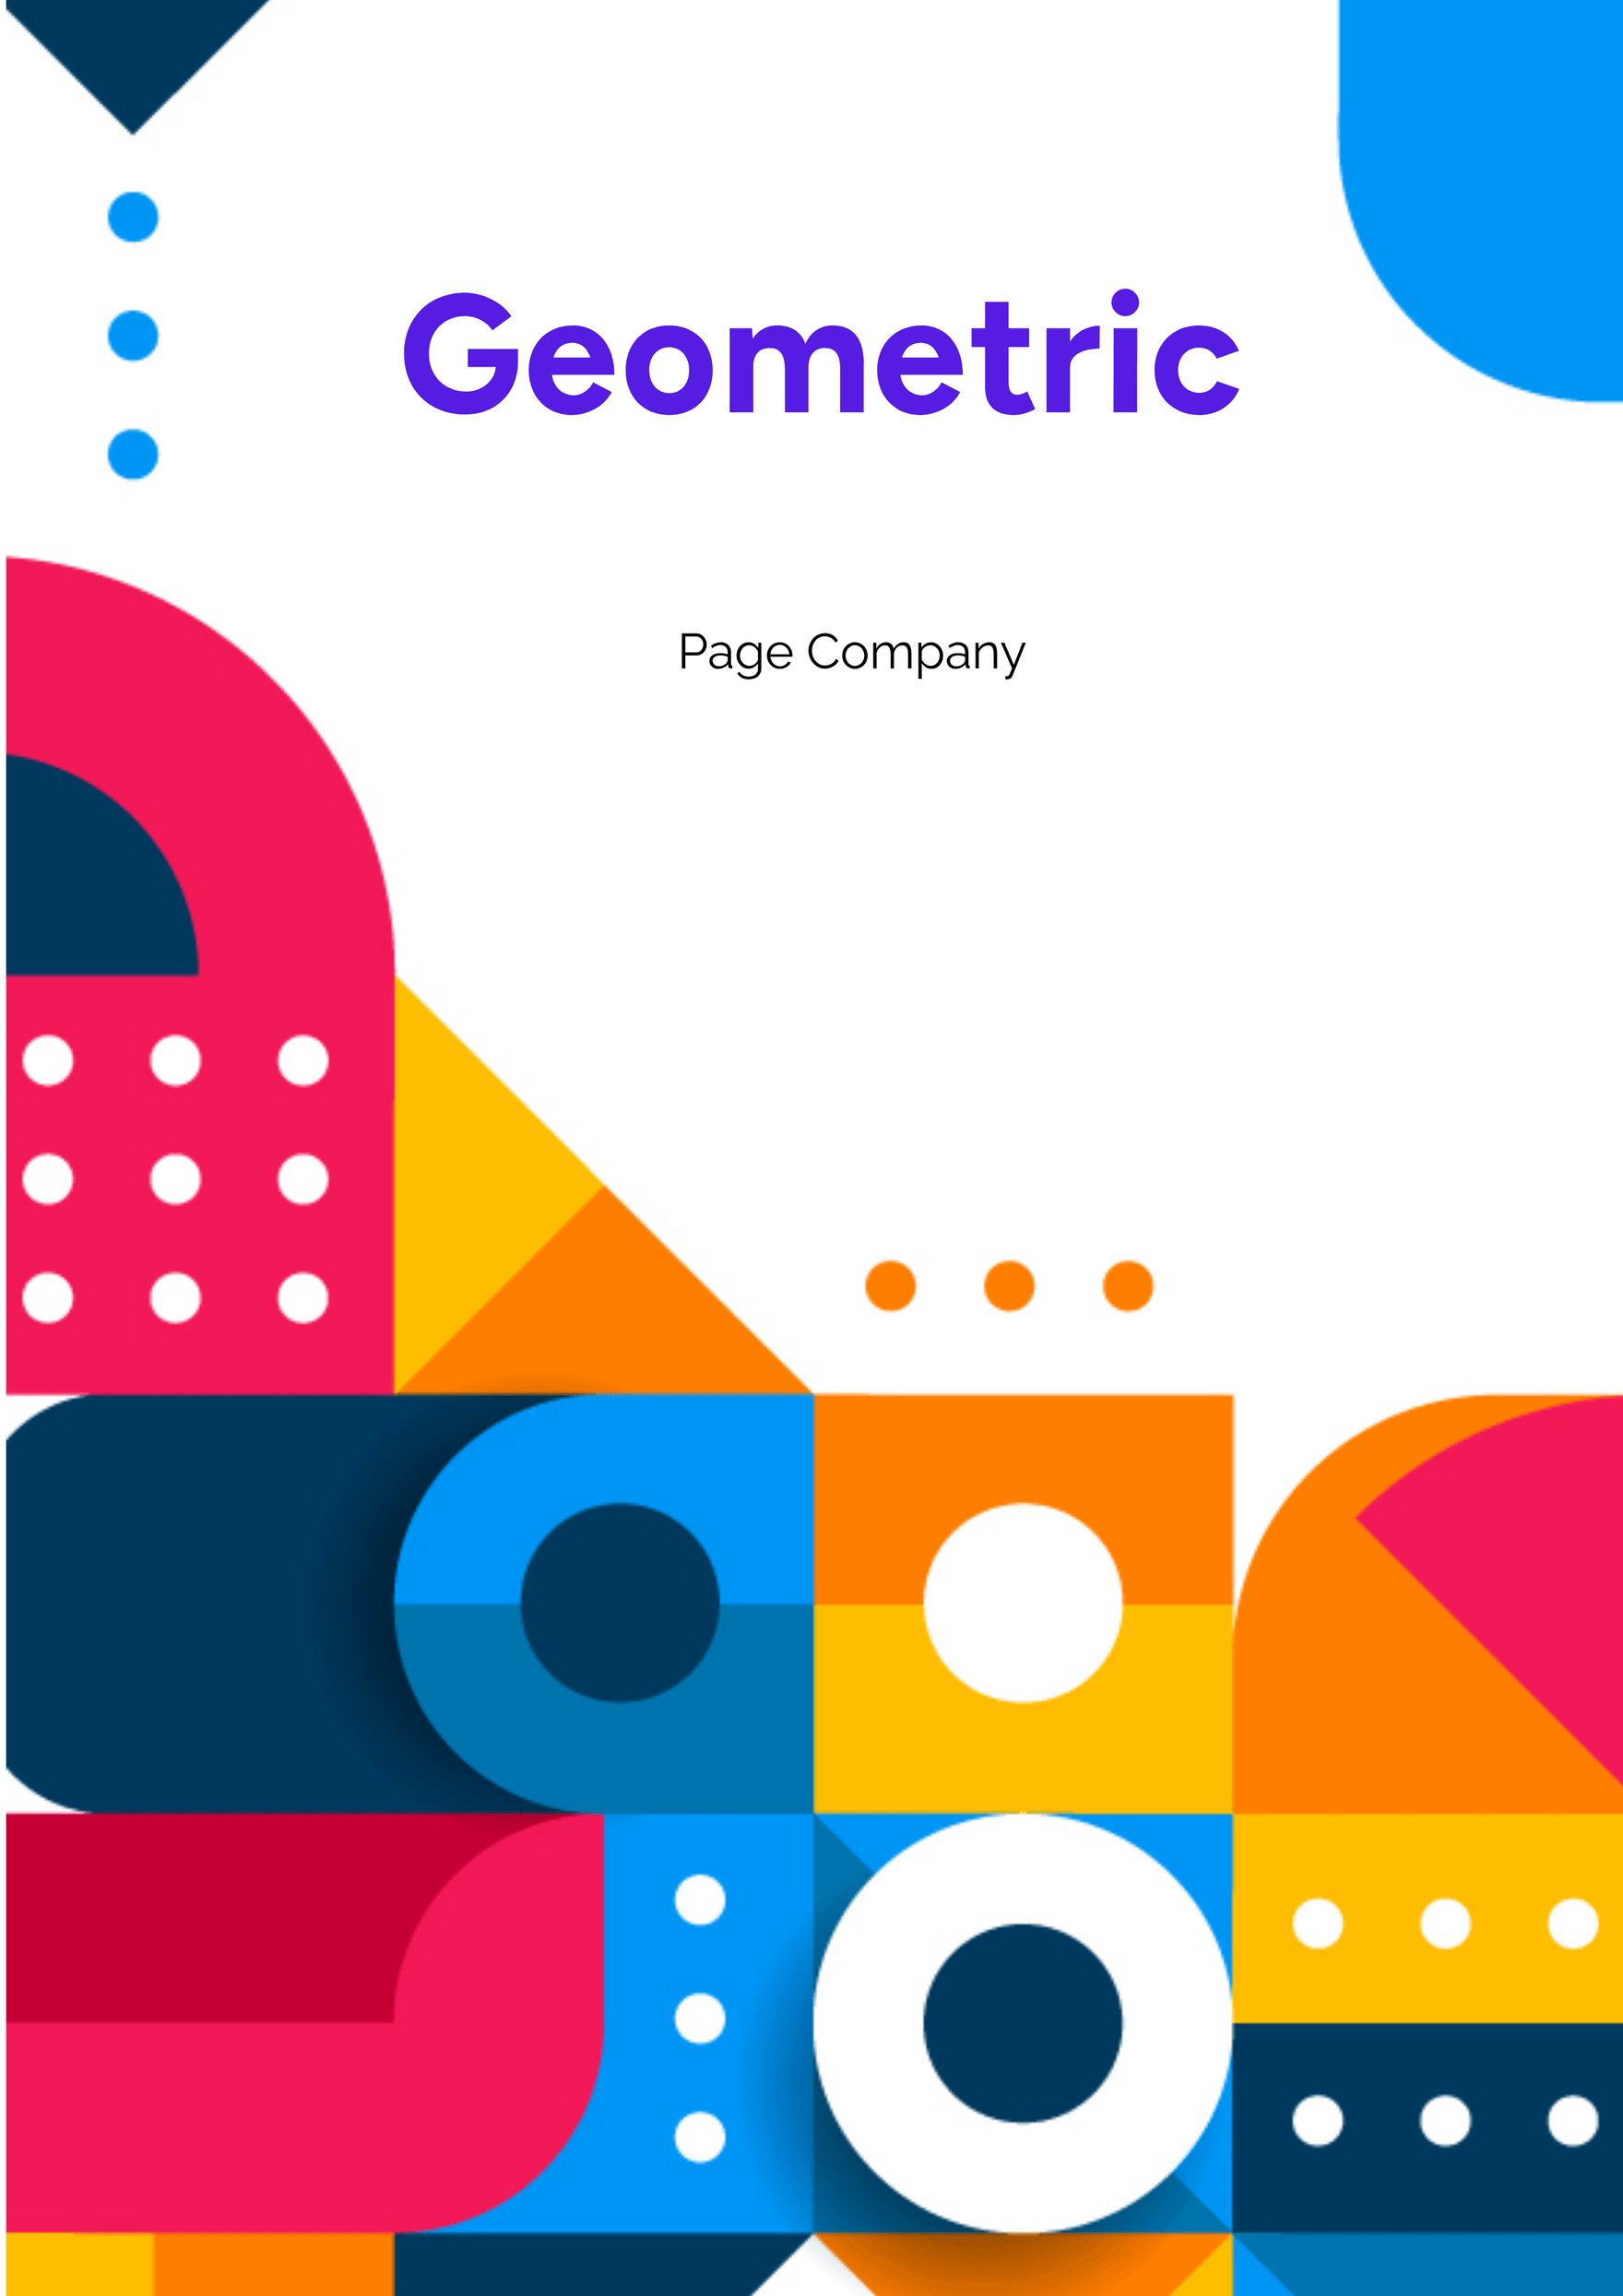 Geometric Cover Page Company